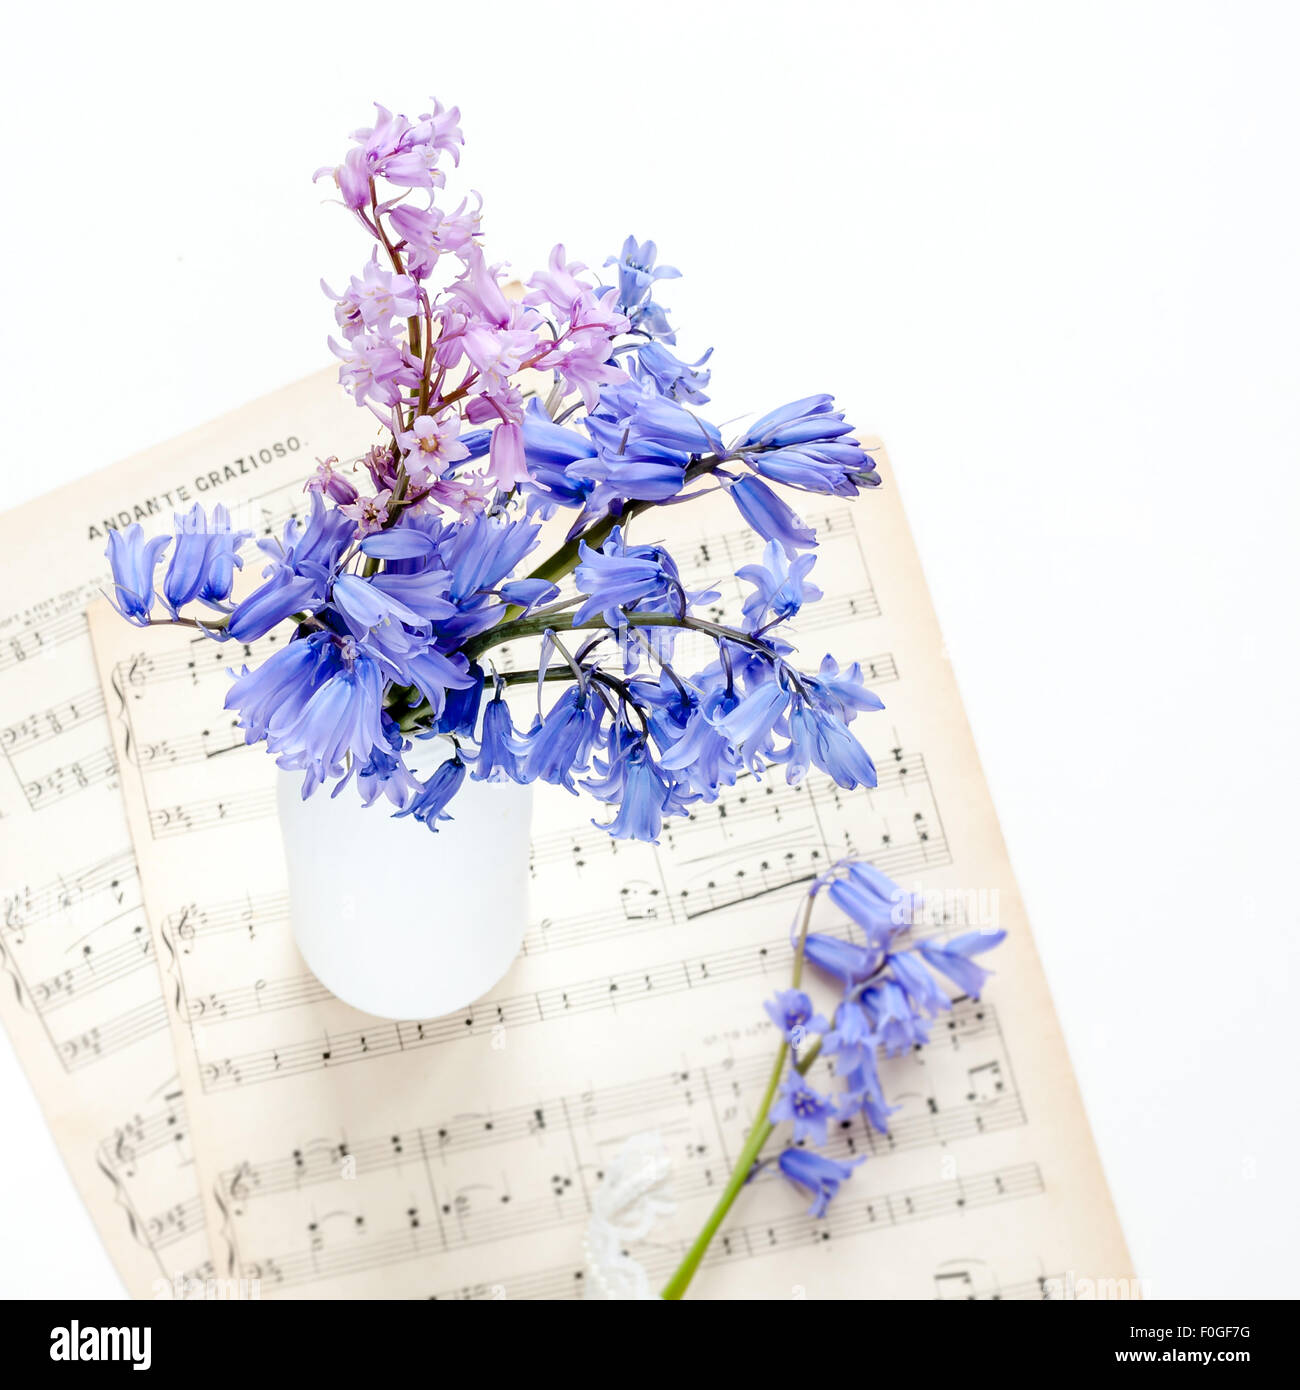 Bluebells in bottiglia bianca su vintage carta da musica Foto Stock